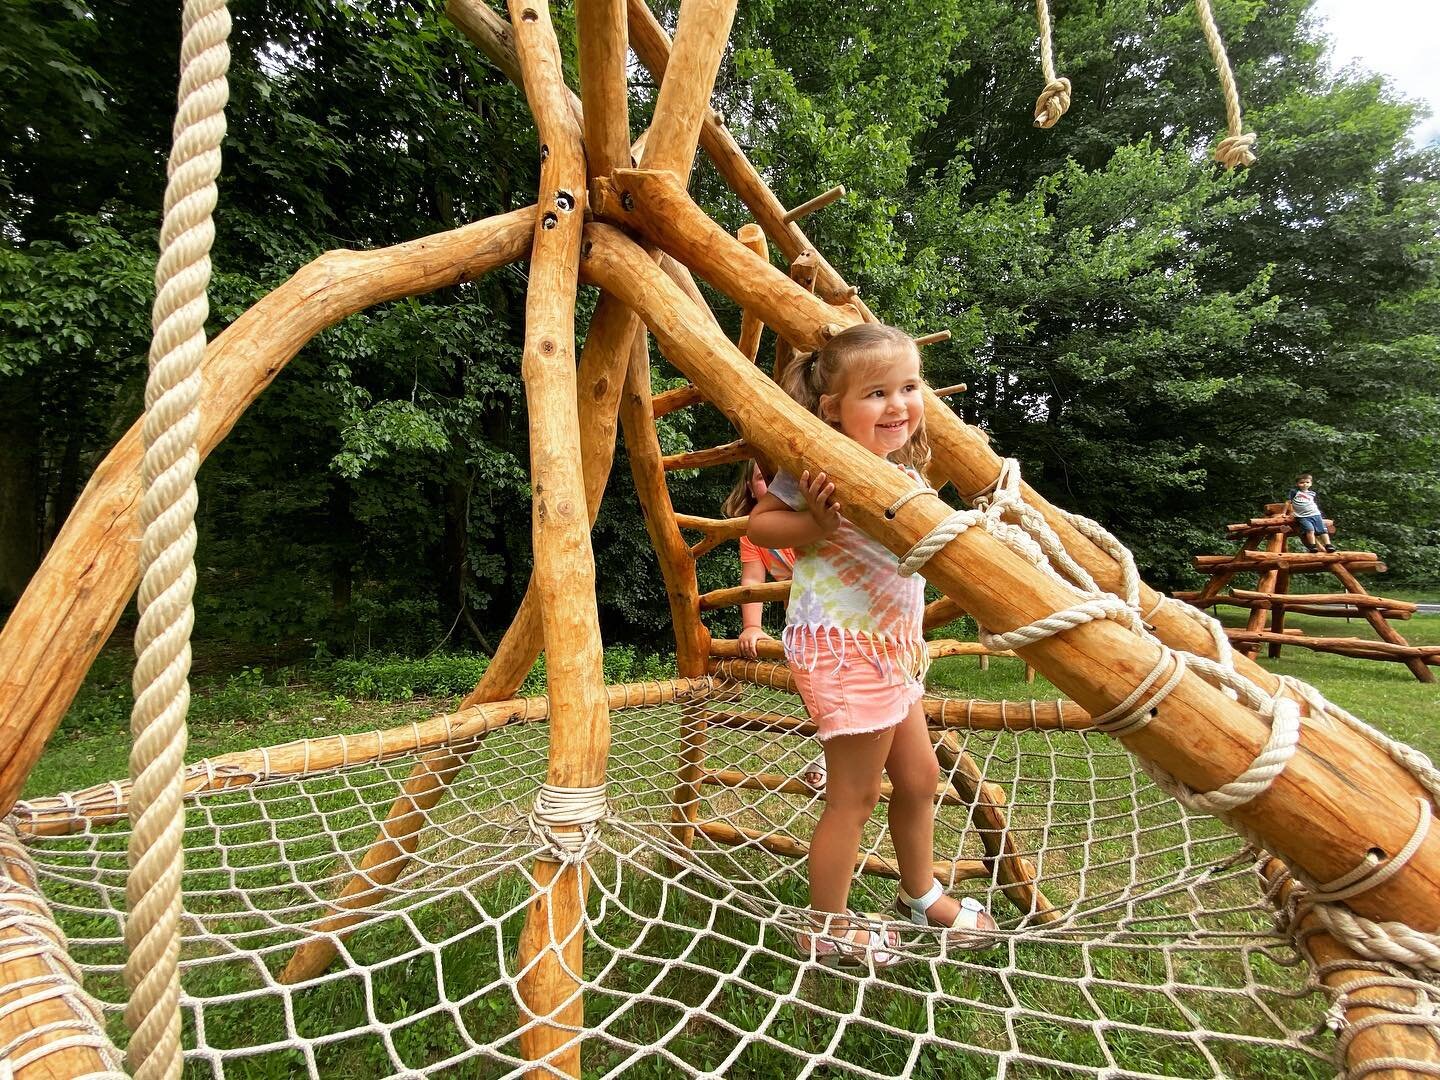 Tree-Mendous custom playground equipment- kid tested, kid approved! Bring adventure to your backyard- contact us today!
#kidsinnature #playground #playgrounds #backyardadventures #custommade #treemendous #natureplay